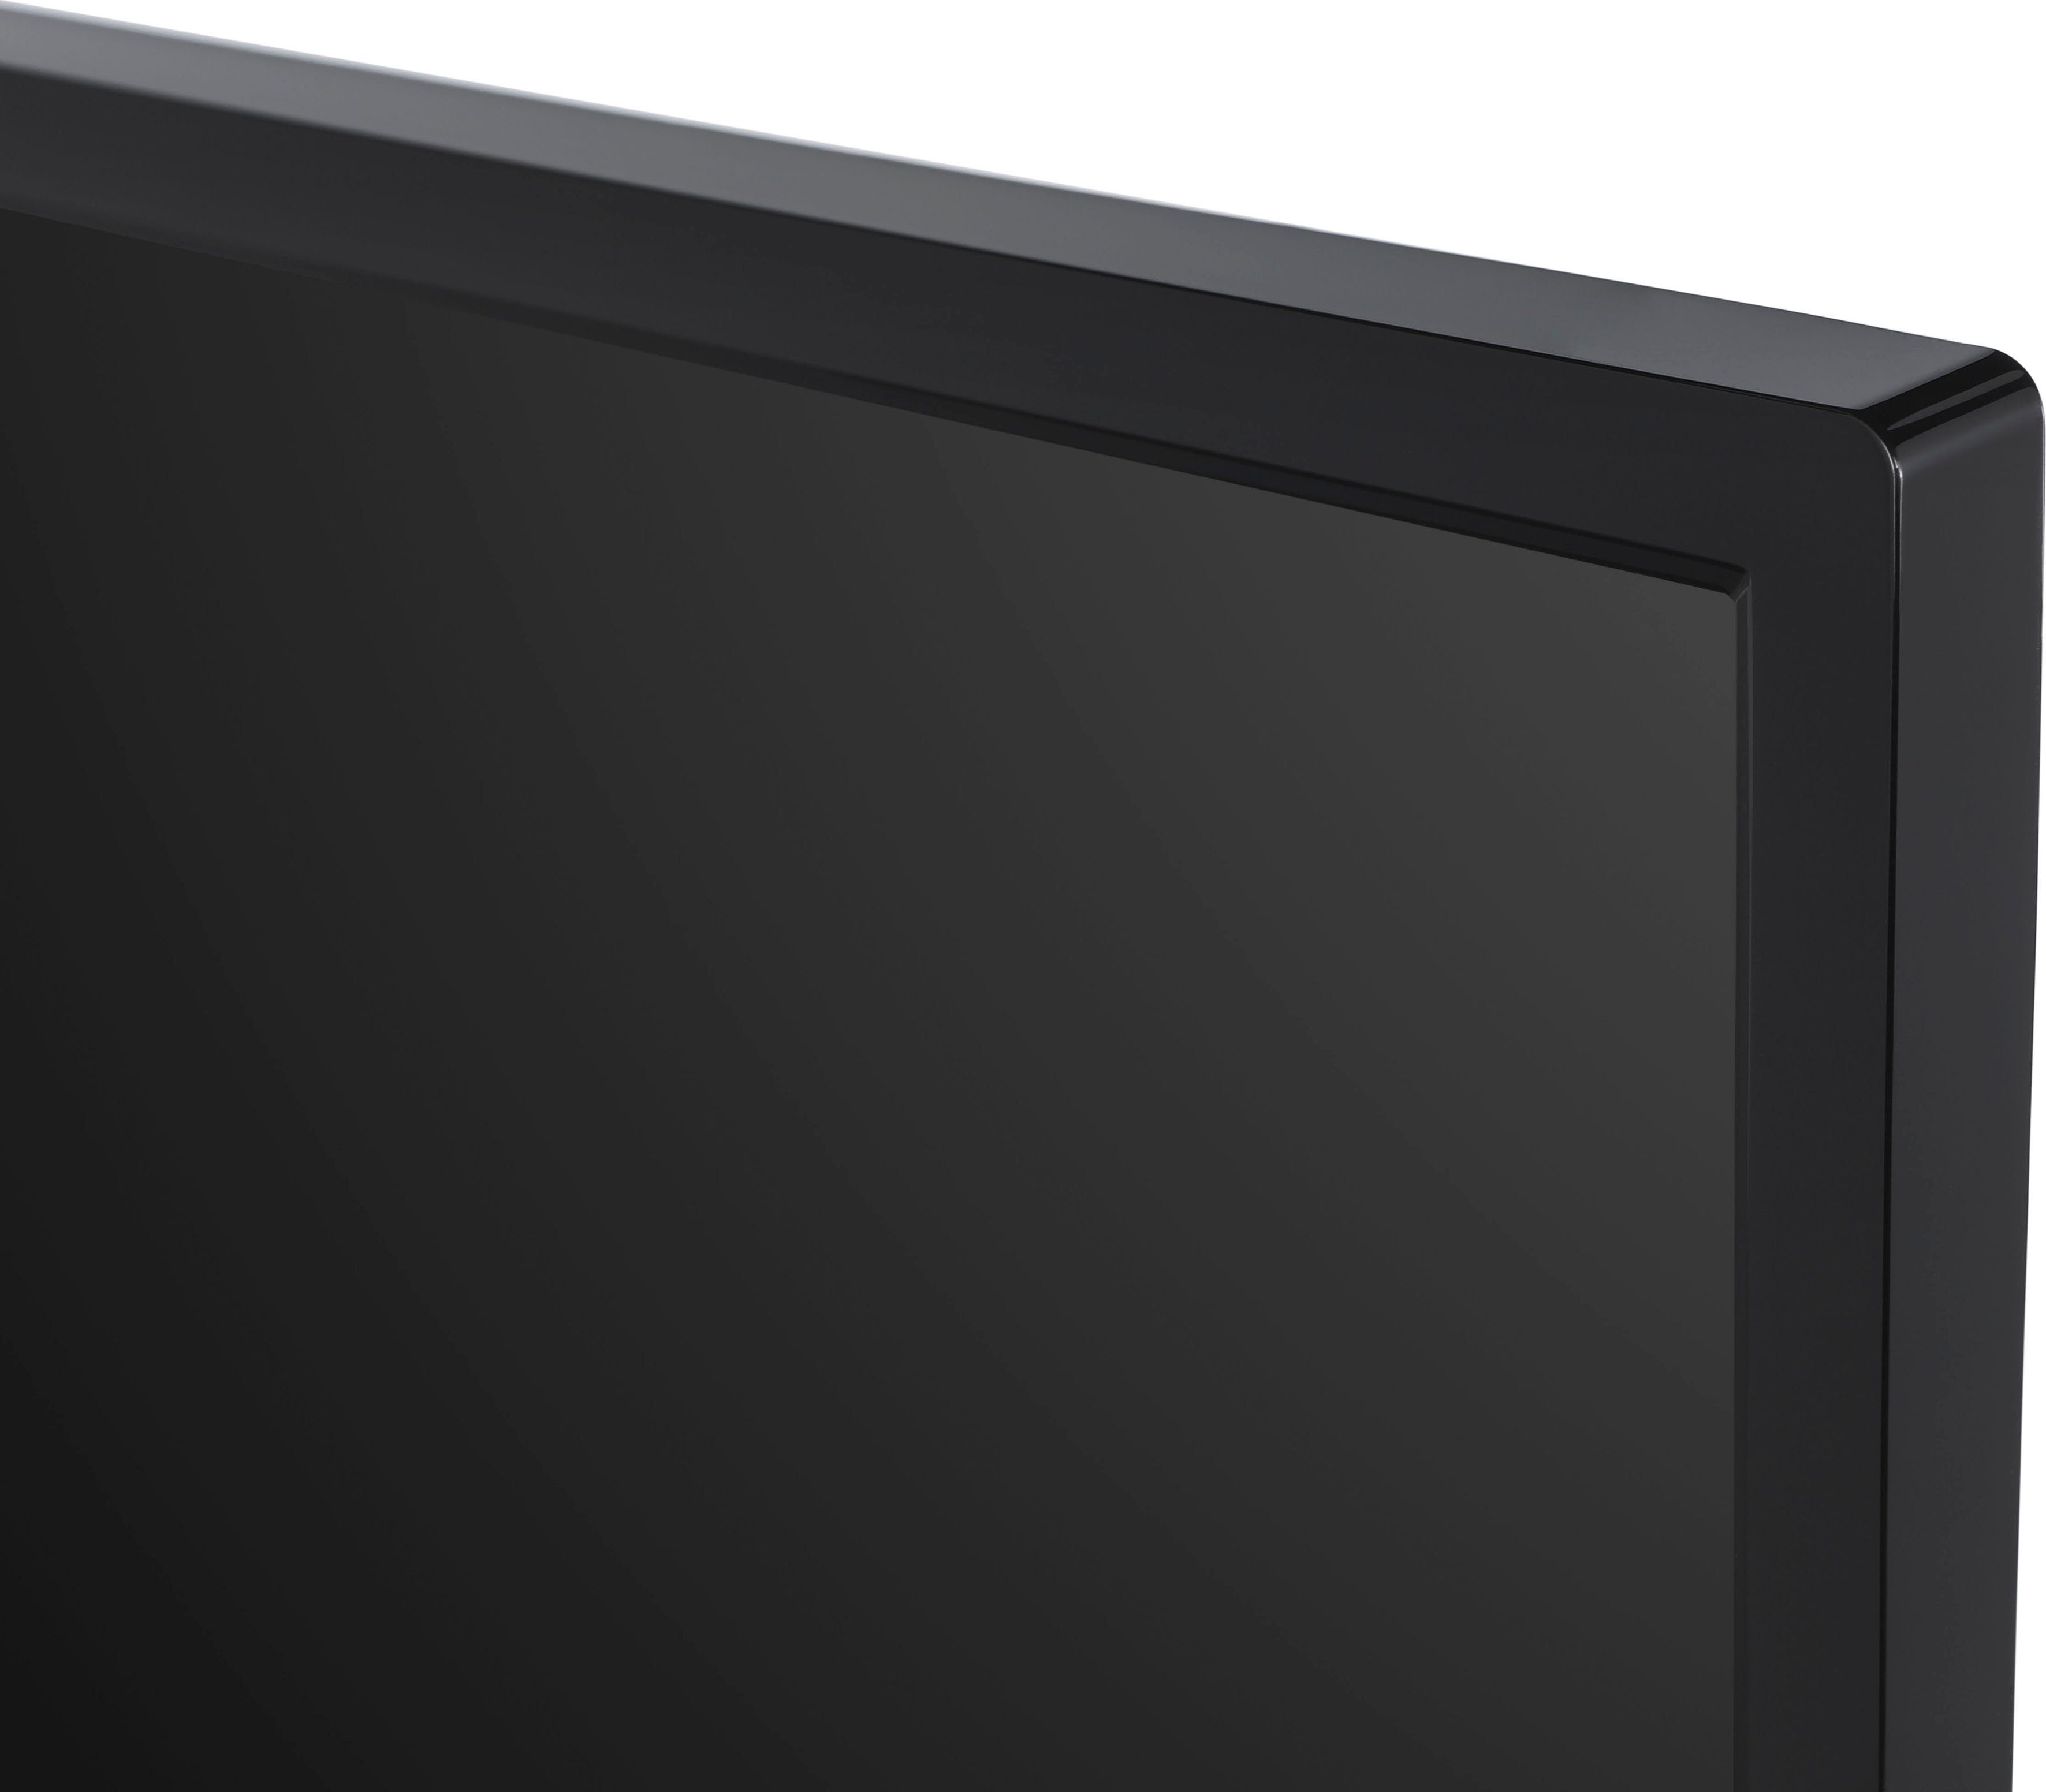 Toshiba 32LK3C63DAA/2 cm/32 (80 Zoll, HD, Smart-TV) LED-Fernseher Full